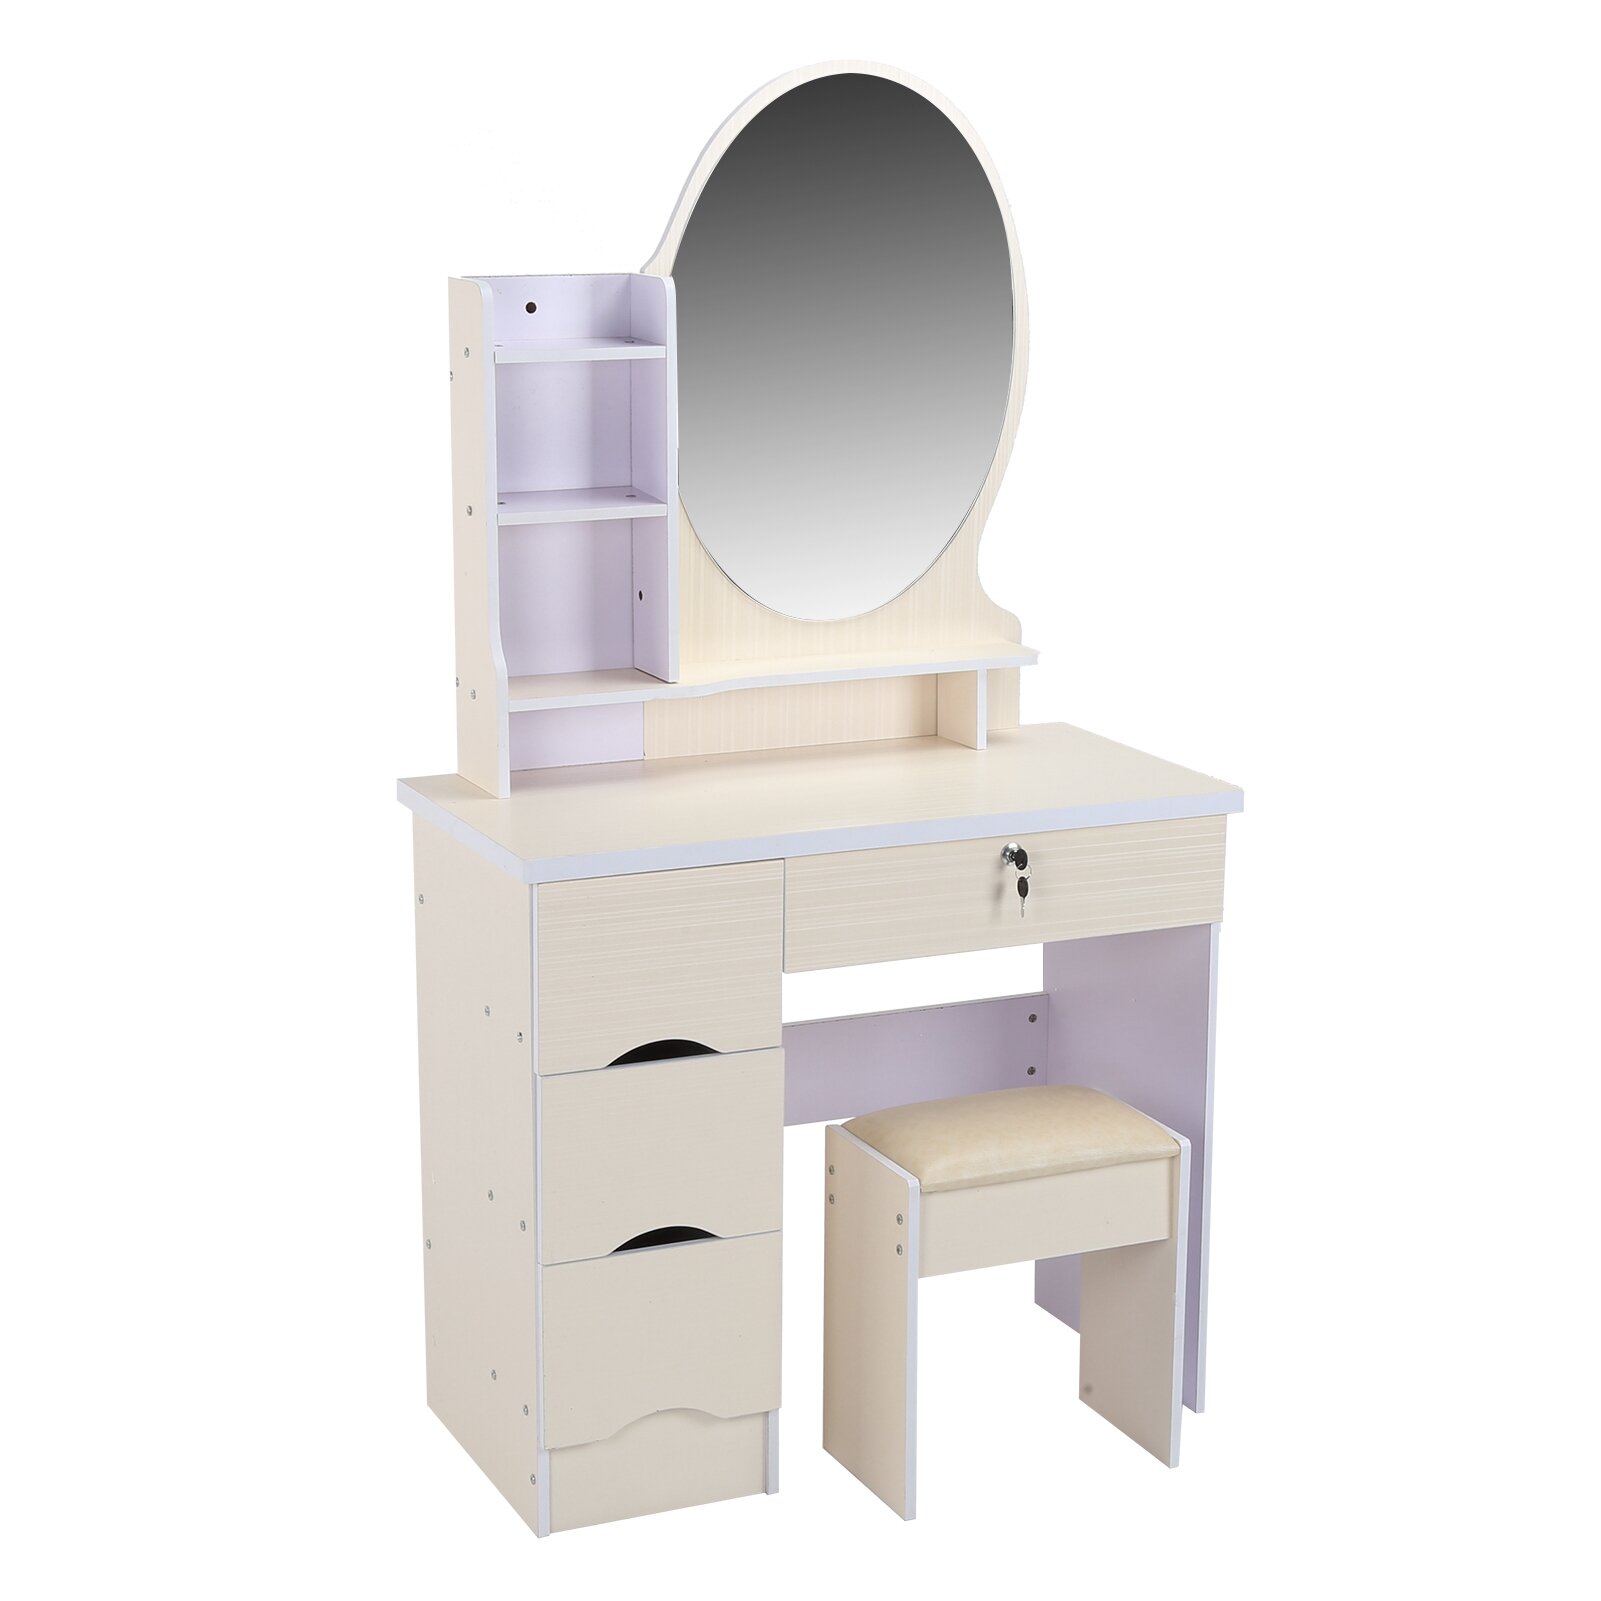 Round mirror Girl Vanity Makeup Table Set Desk W/wood legs Upholstered Stool